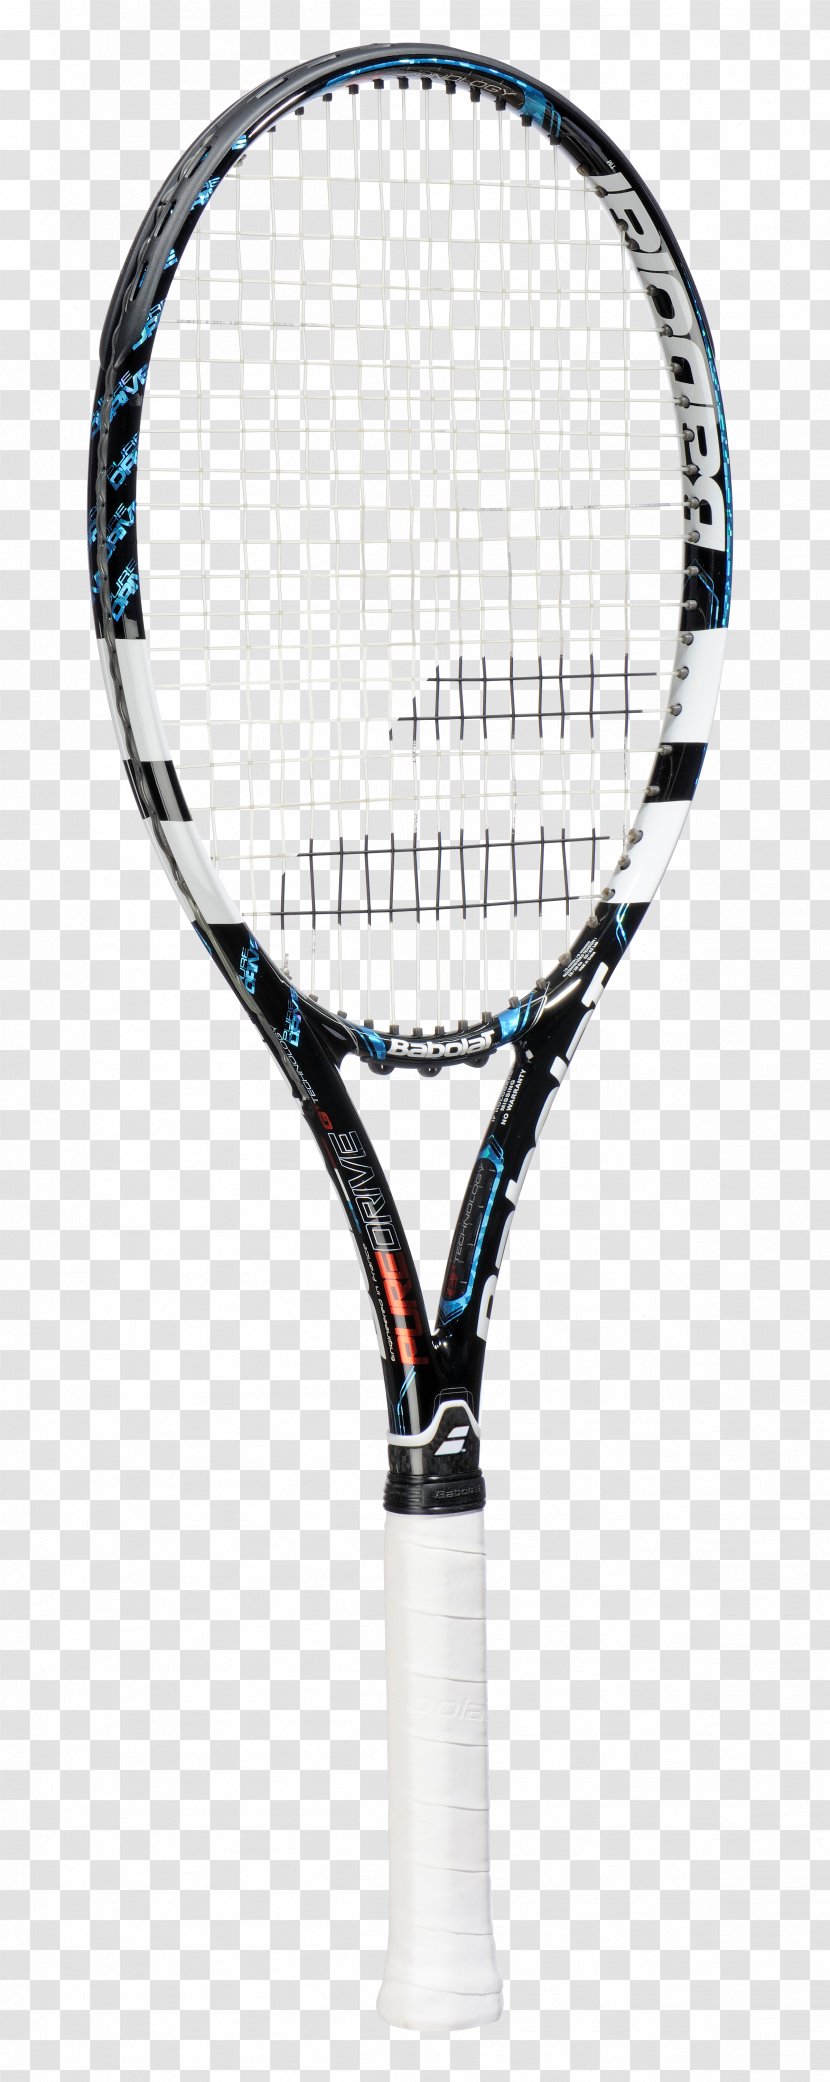 2014 French Open Babolat Racket Rakieta Tenisowa Tennis - Equipment And Supplies Transparent PNG